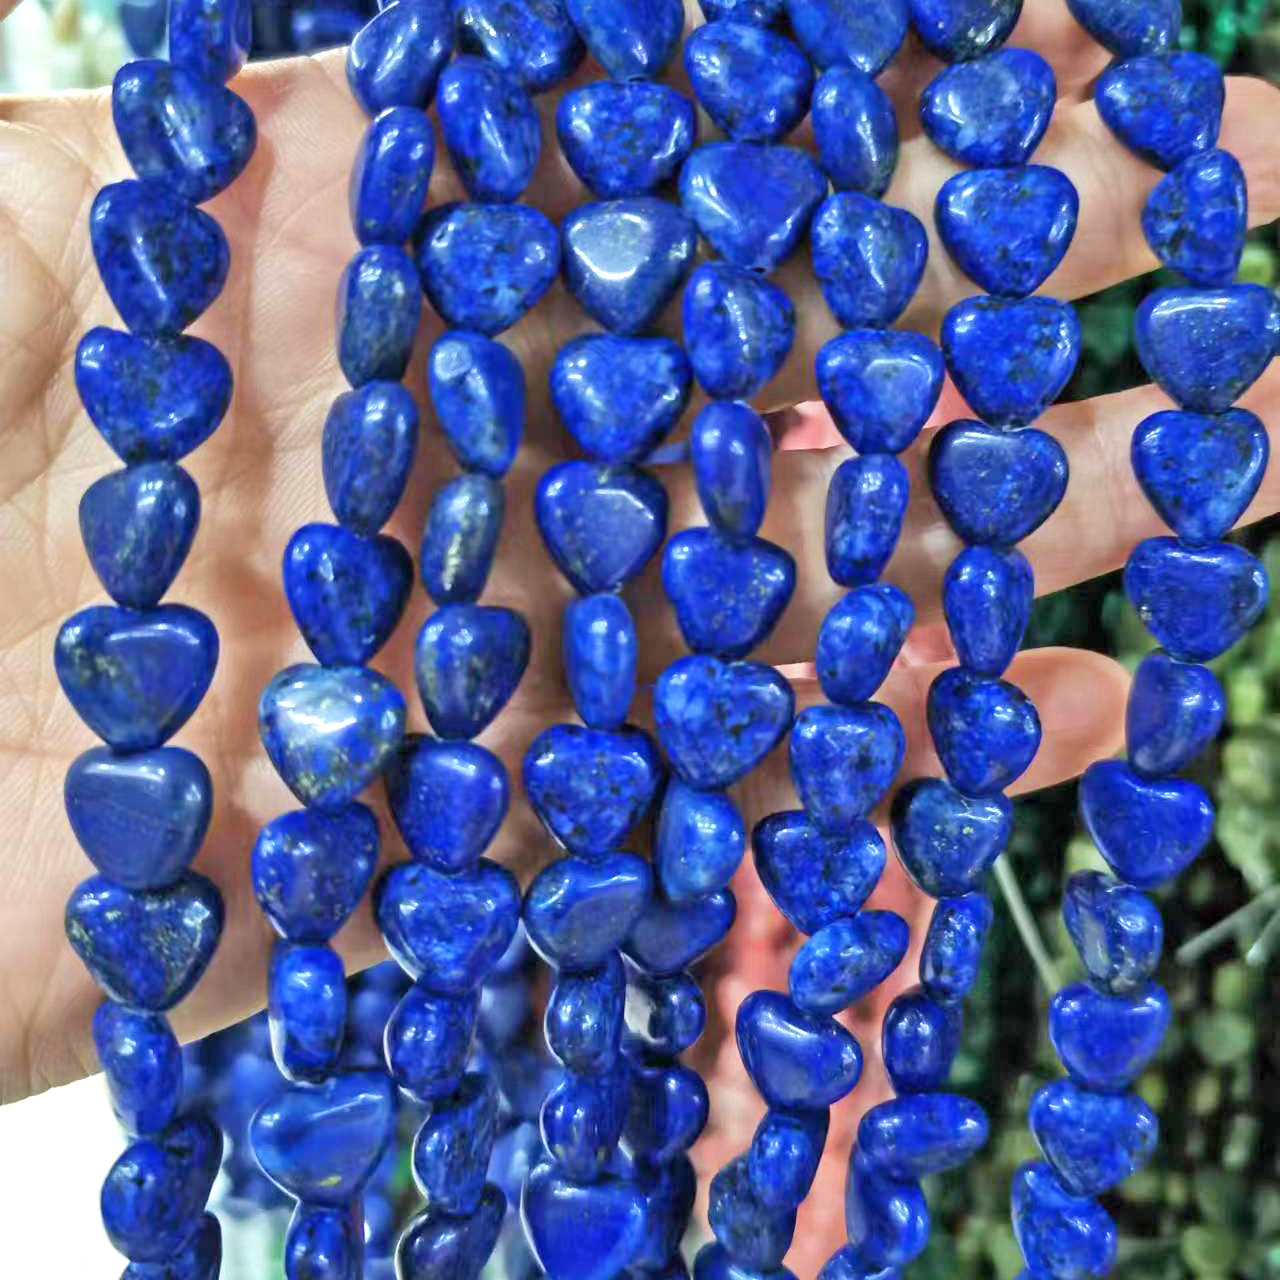 26:lapis lazuli